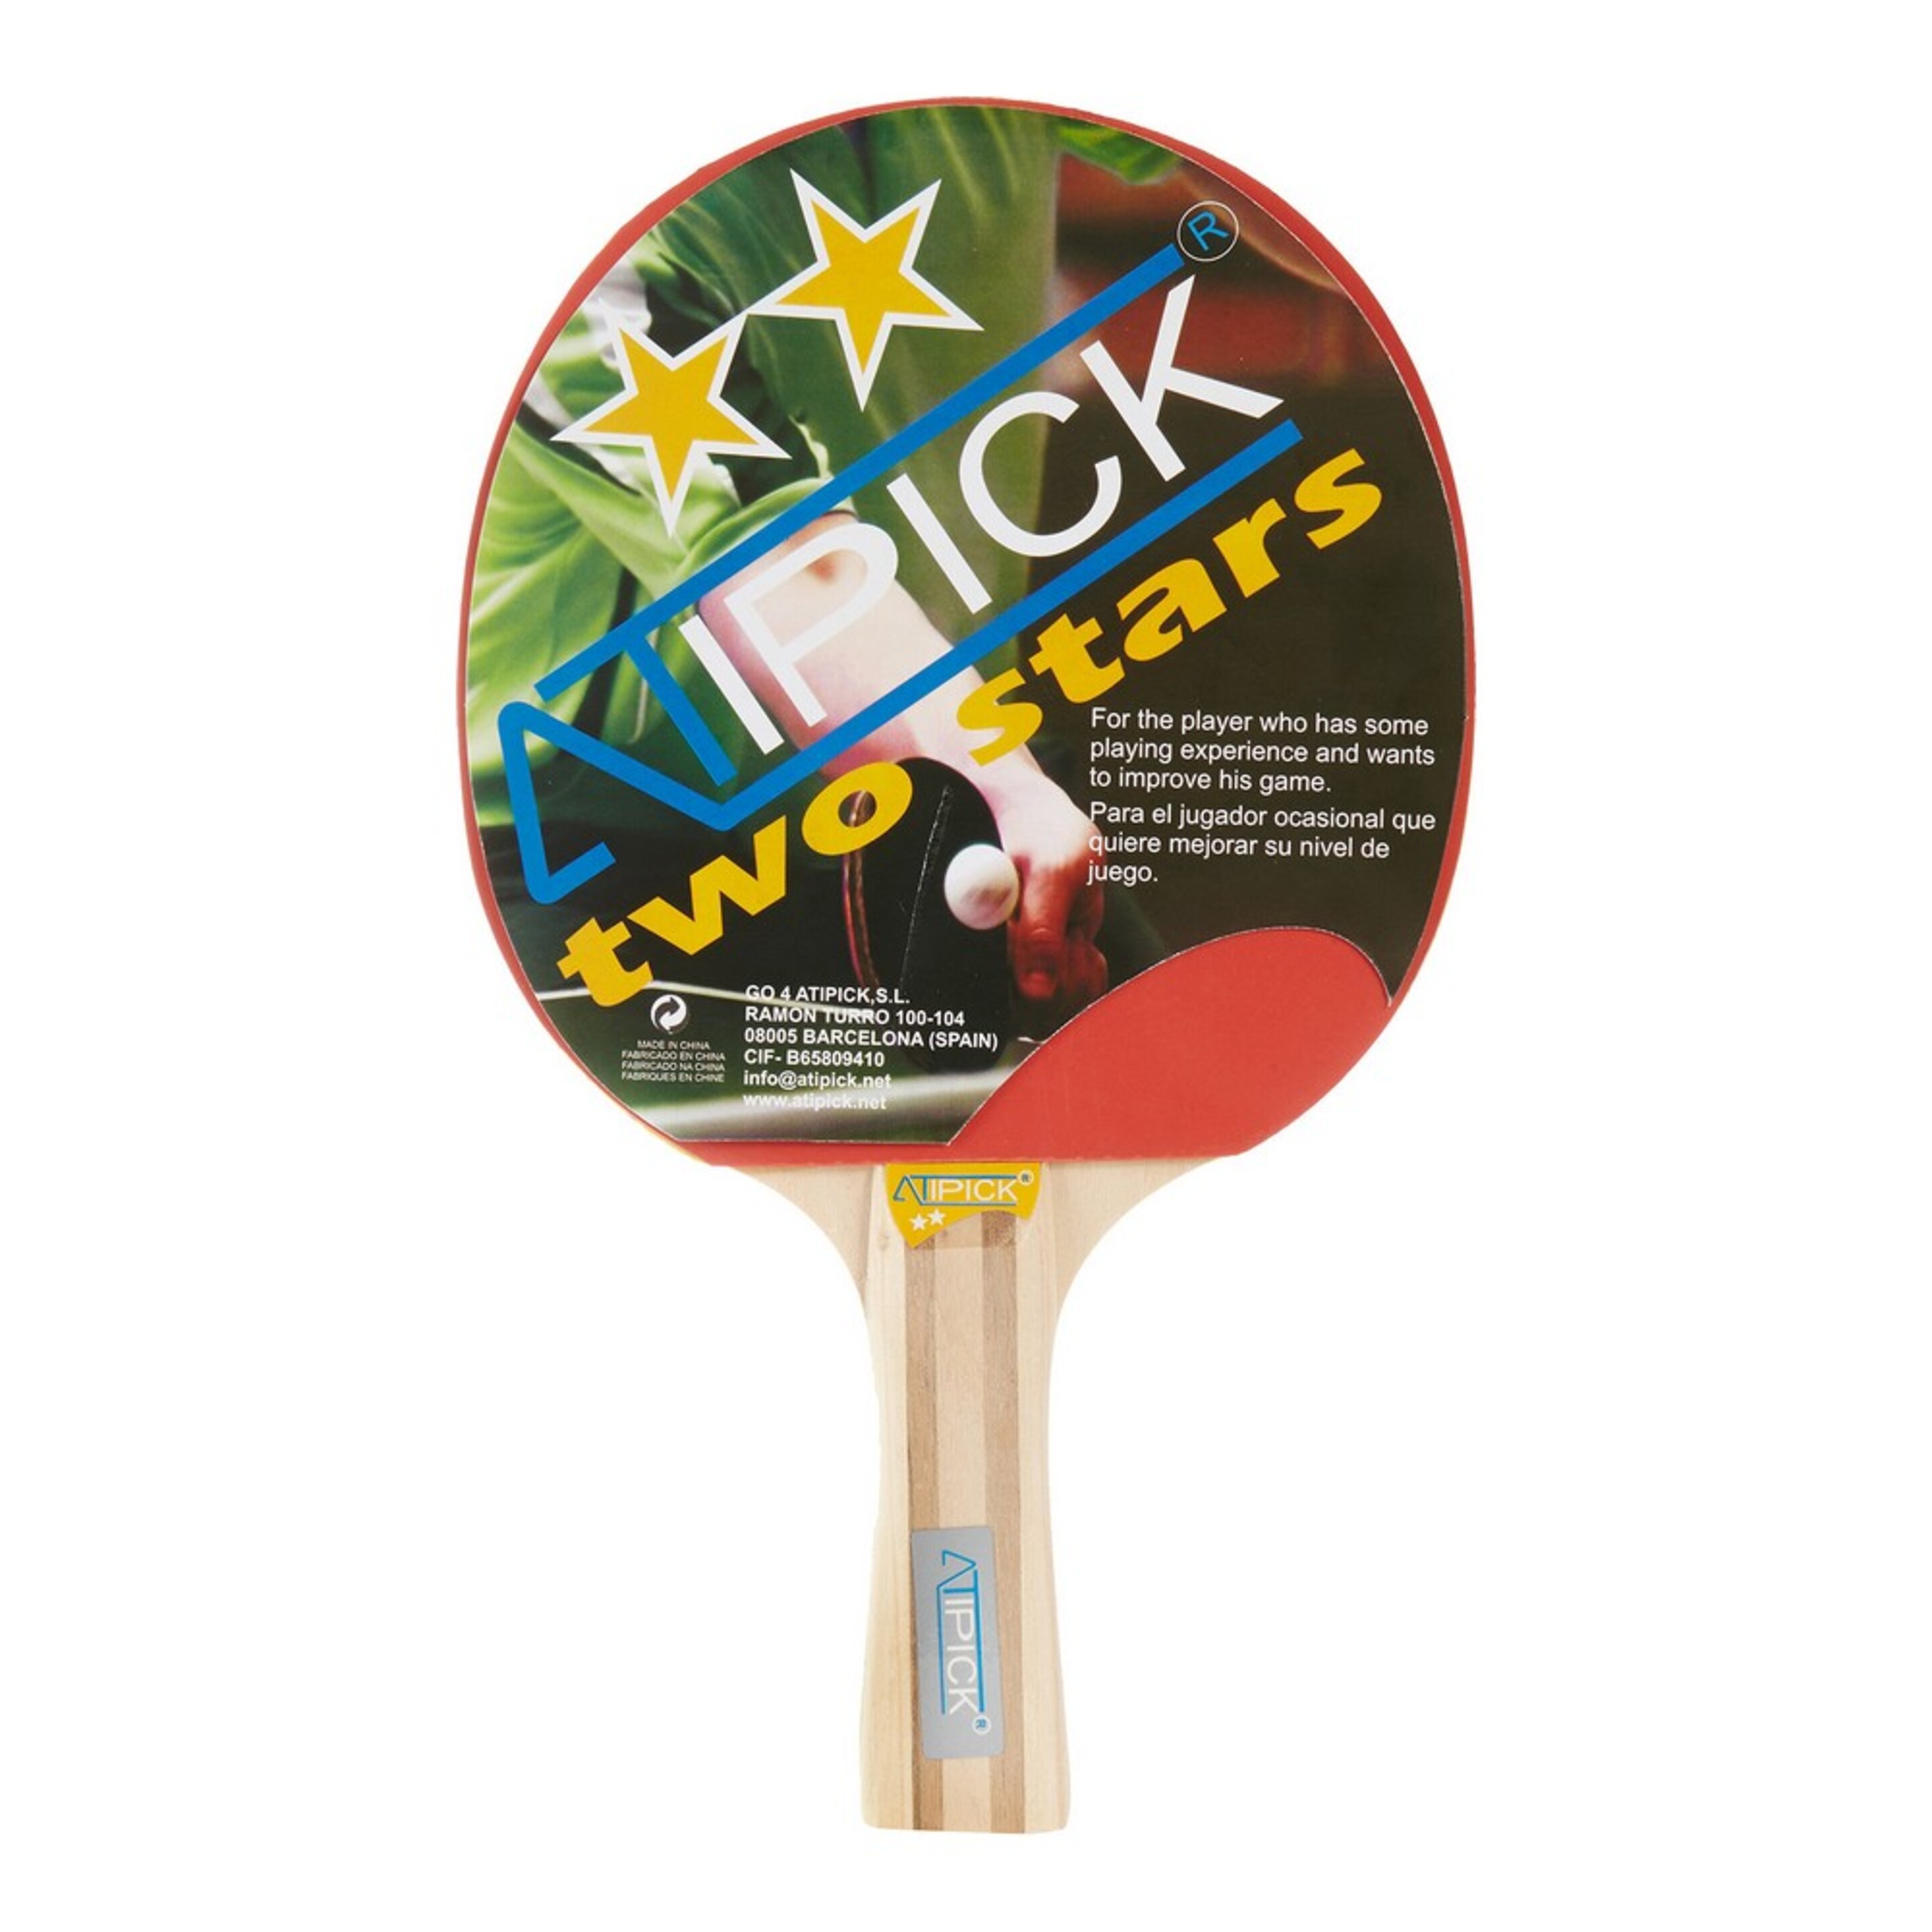 Raqueta De Ping Pong Atipick Rqp40400 Principiantes - Rojo - Raqueta De Ping Pong Rqp40400  MKP